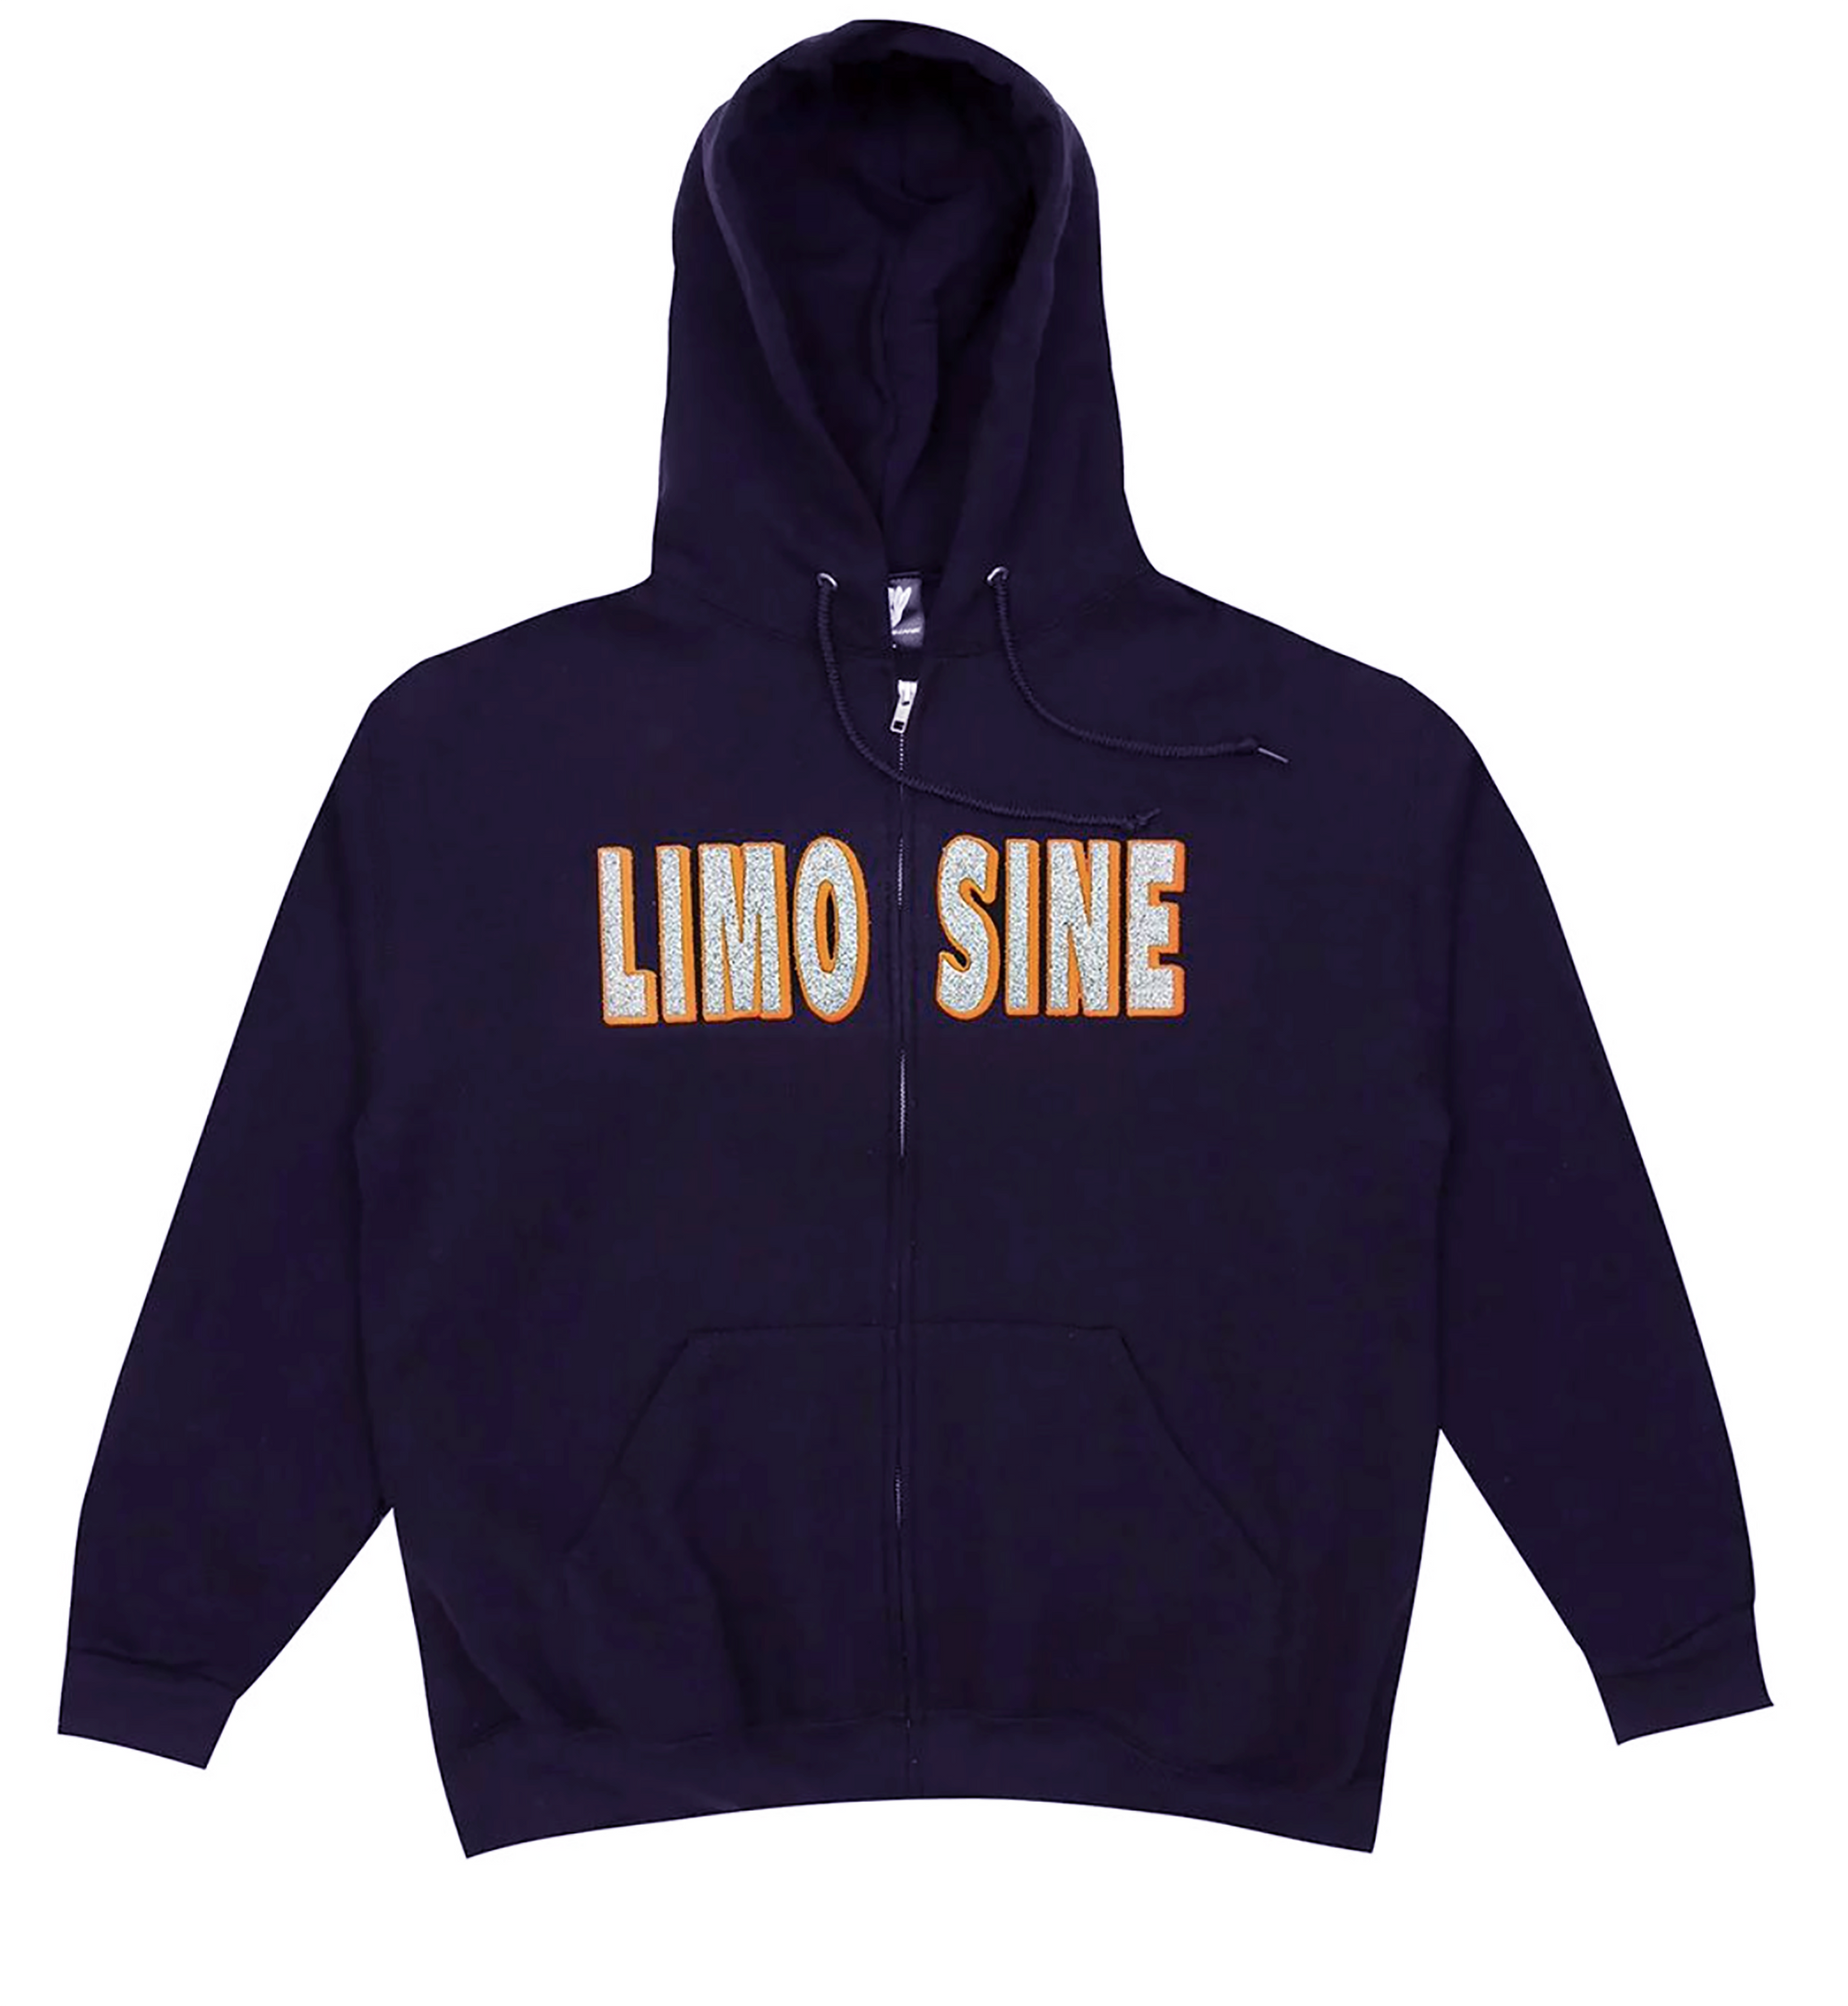 Limosine 'Sparkle Zip' Hooded Sweatshirt - Navy